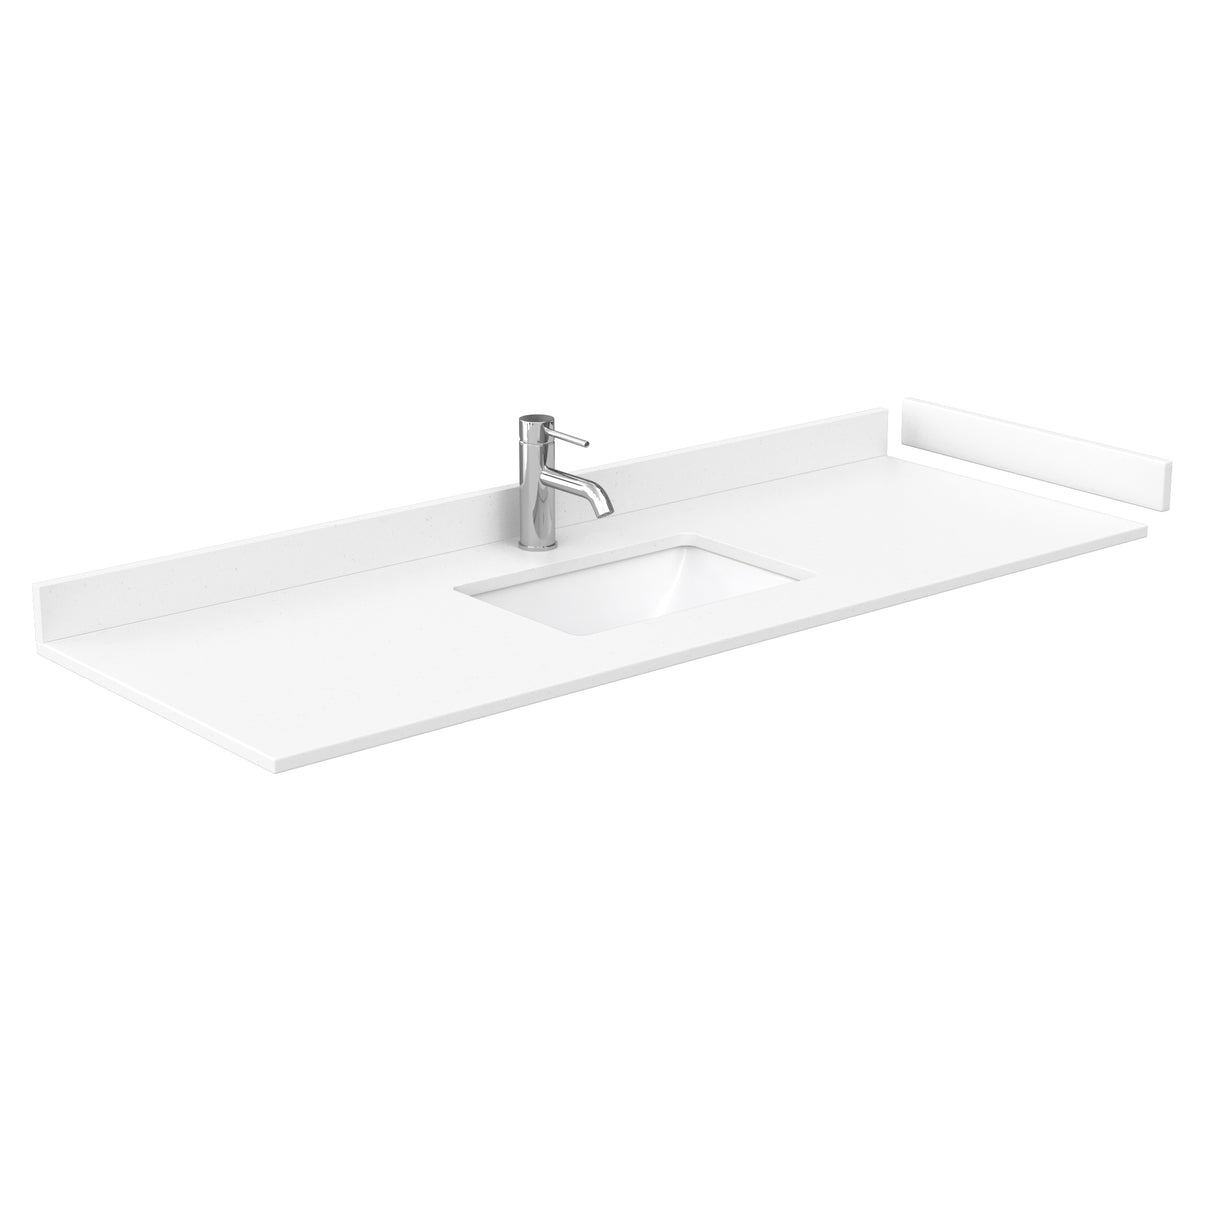 Beckett 60 Inch Single Bathroom Vanity in Dark Gray White Cultured Marble Countertop Undermount Square Sink No Mirror